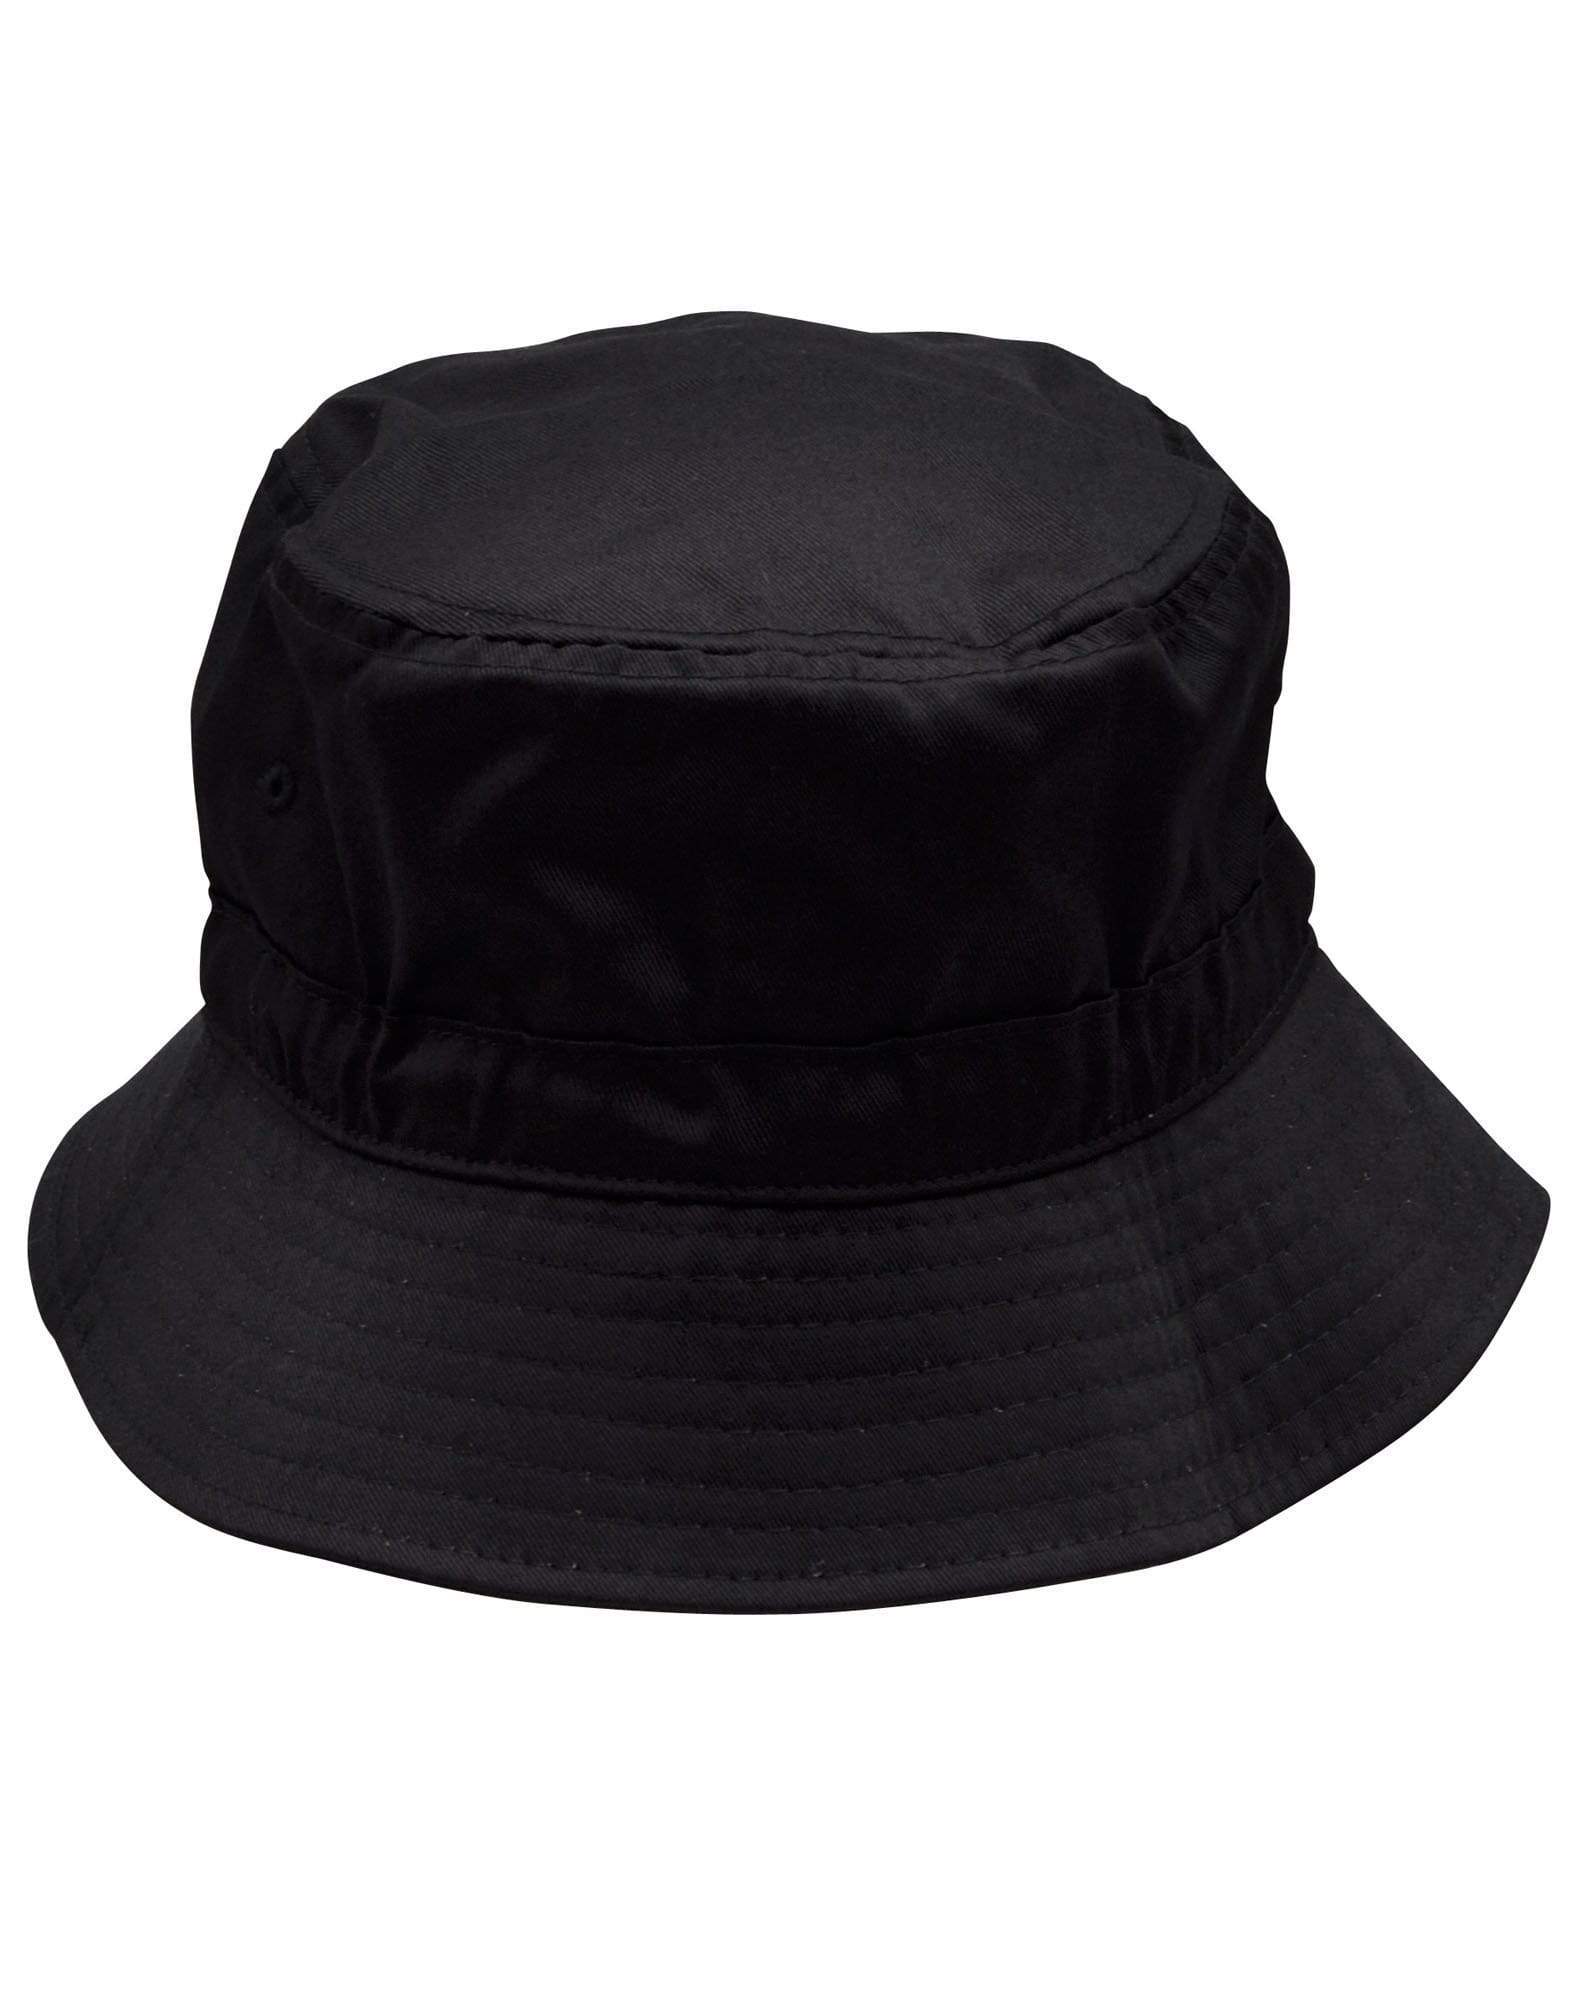 Bucket Hat With Toggle H1034 Active Wear Winning Spirit Black S/M 